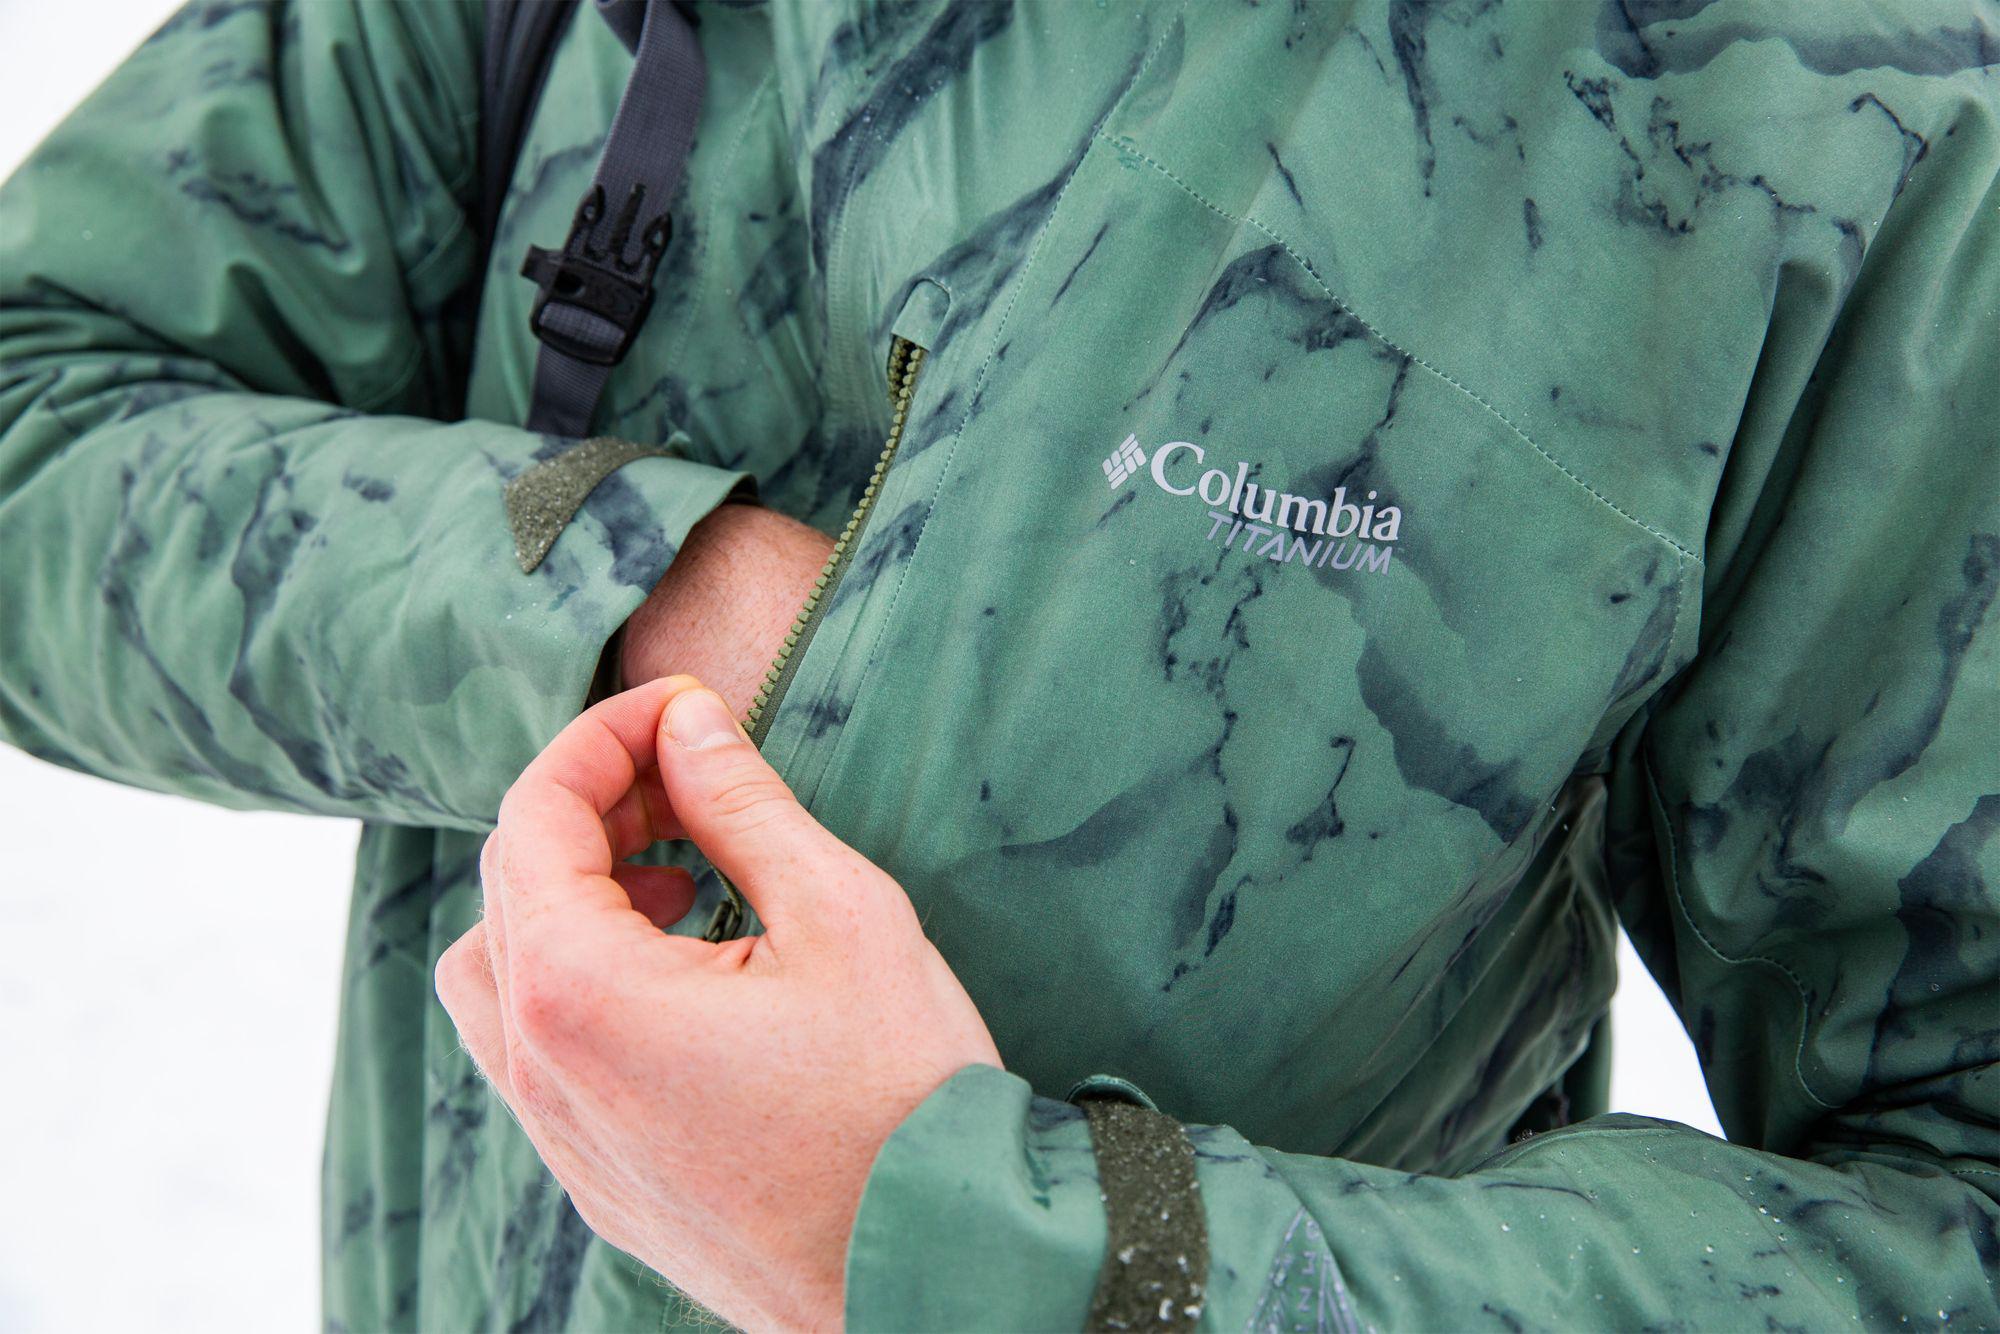 columbia men's snow rival jacket